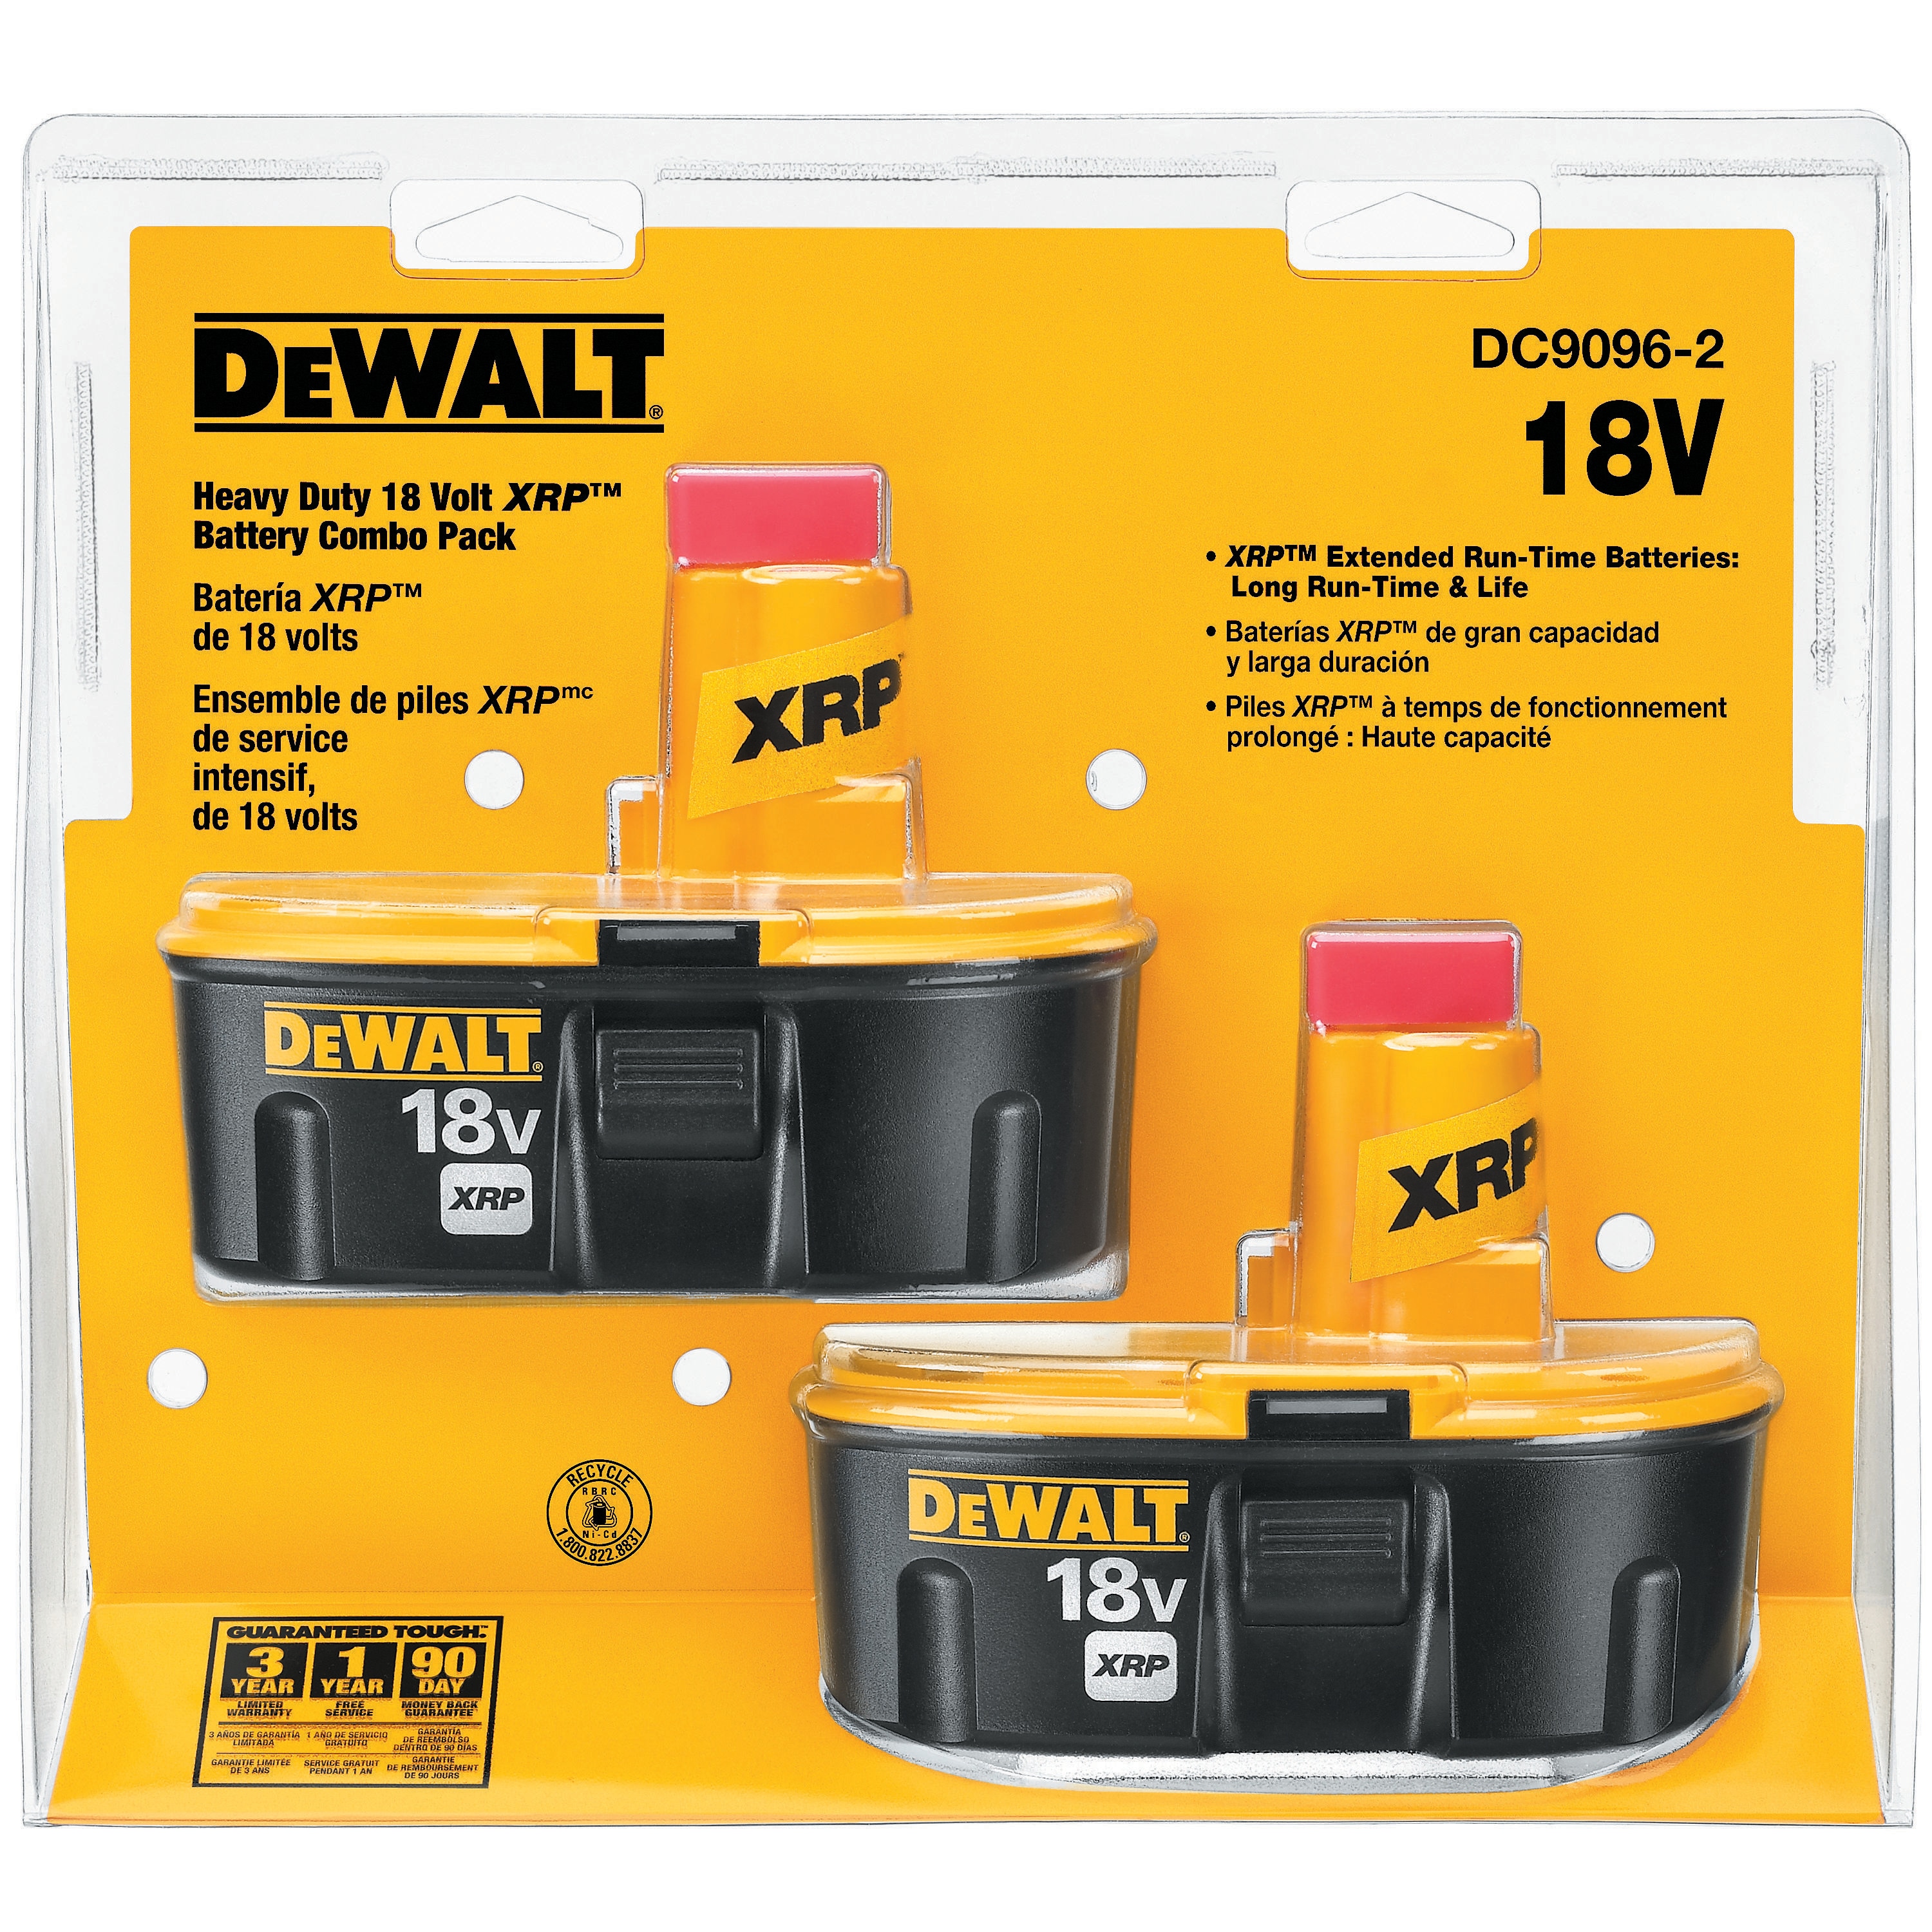 DEWALT Dcd960 Heavy Duty 18v 1/2" Cordless Drill/driver 18 Volt XRP for sale online